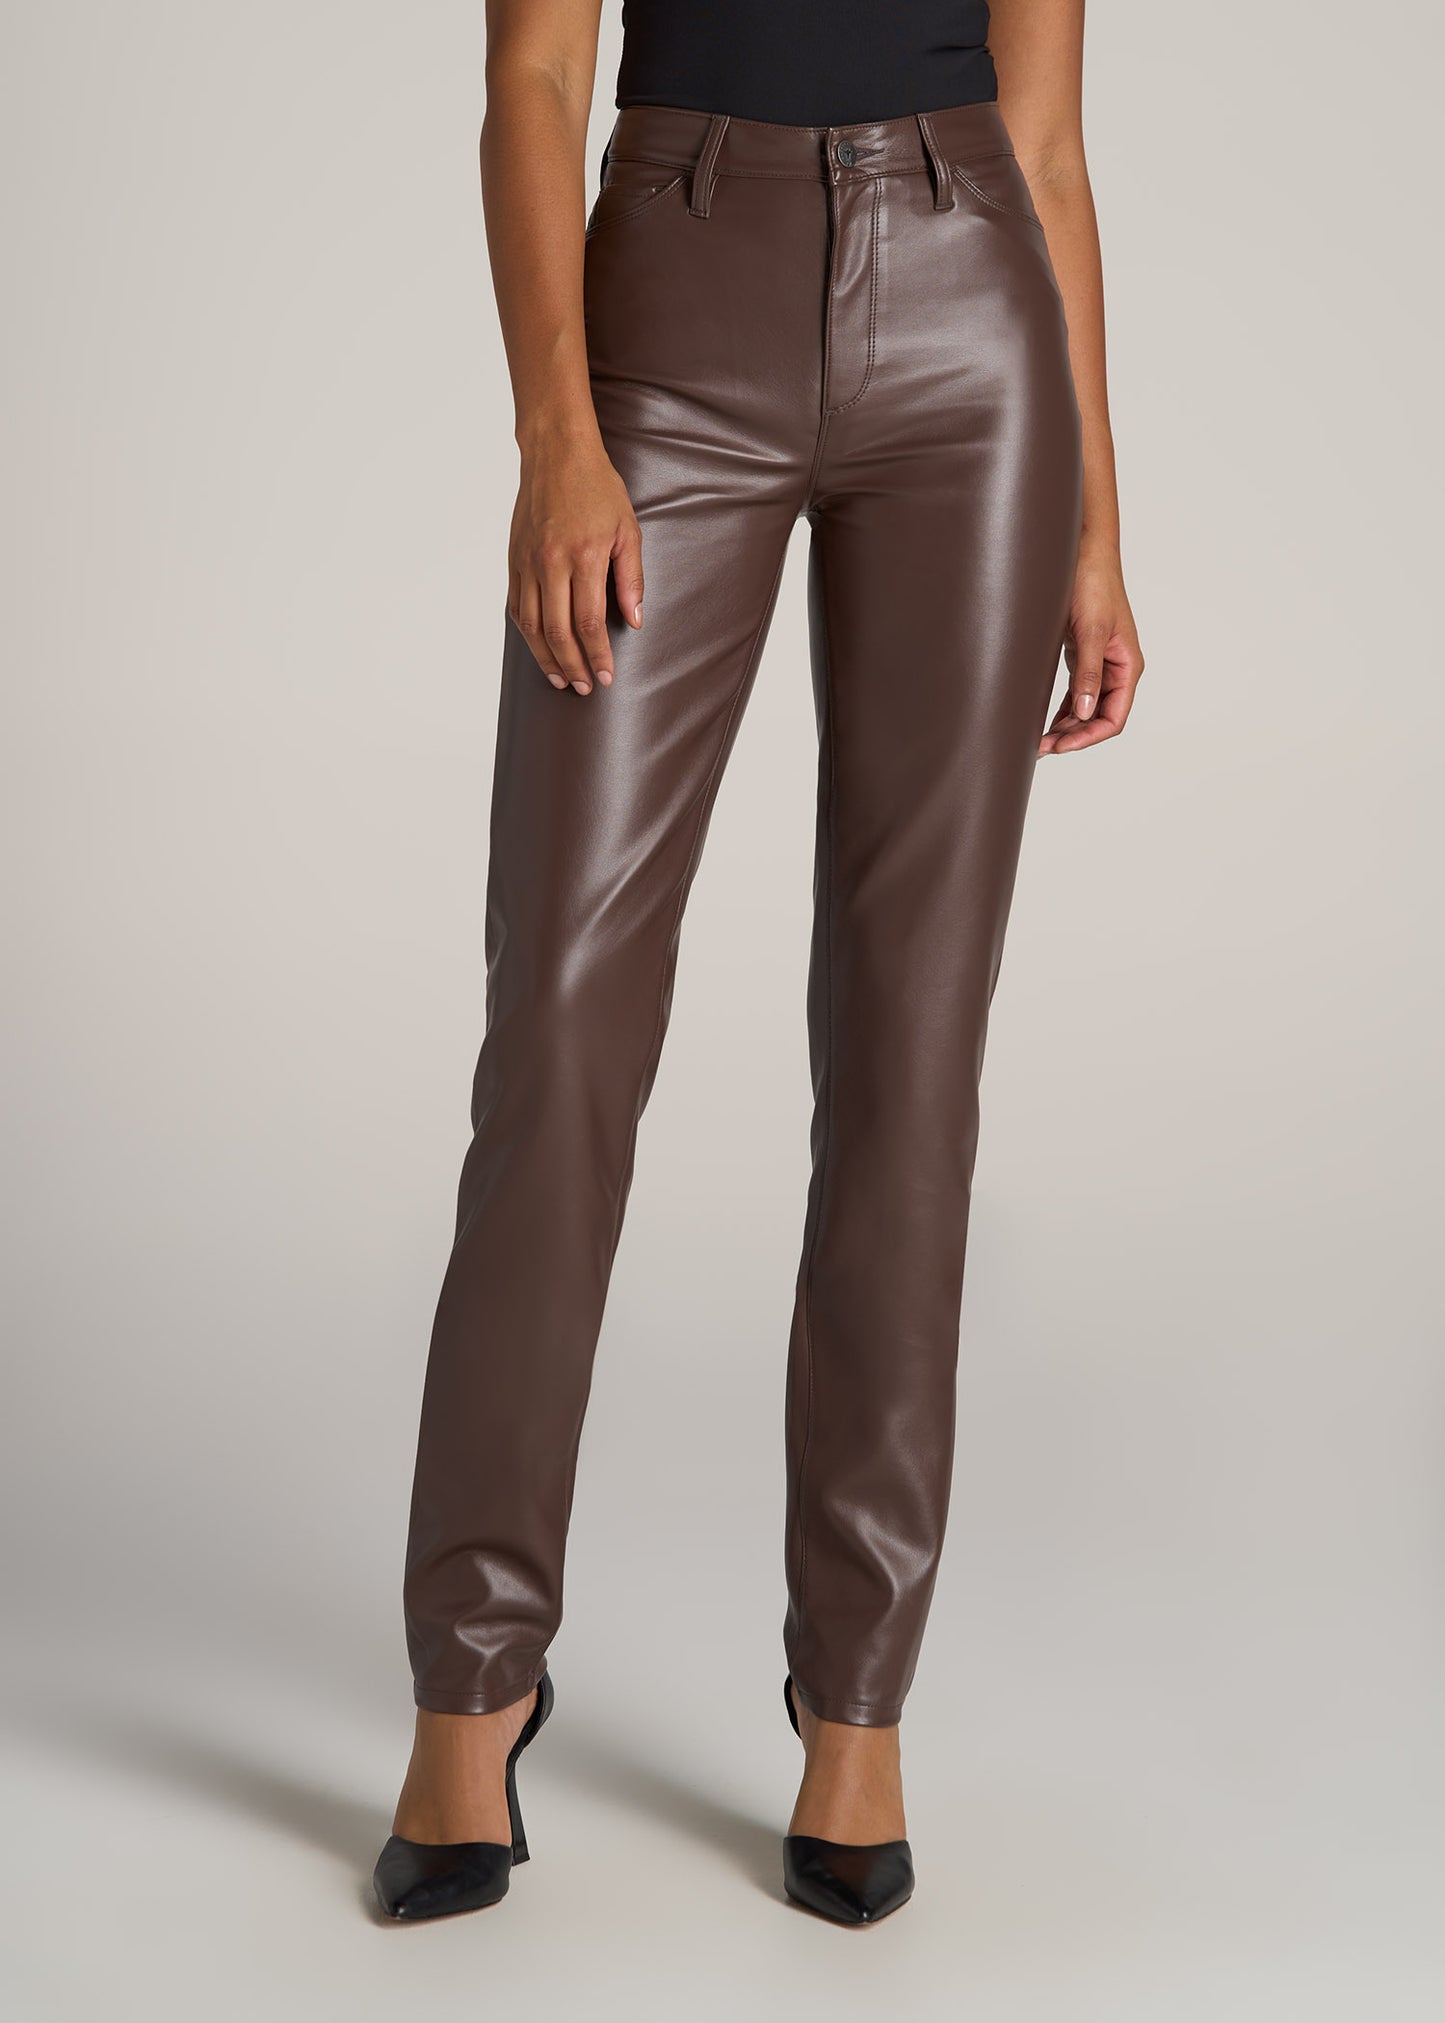 Women's Faux Fur Lined Leather Pants Straight Leg High Waist